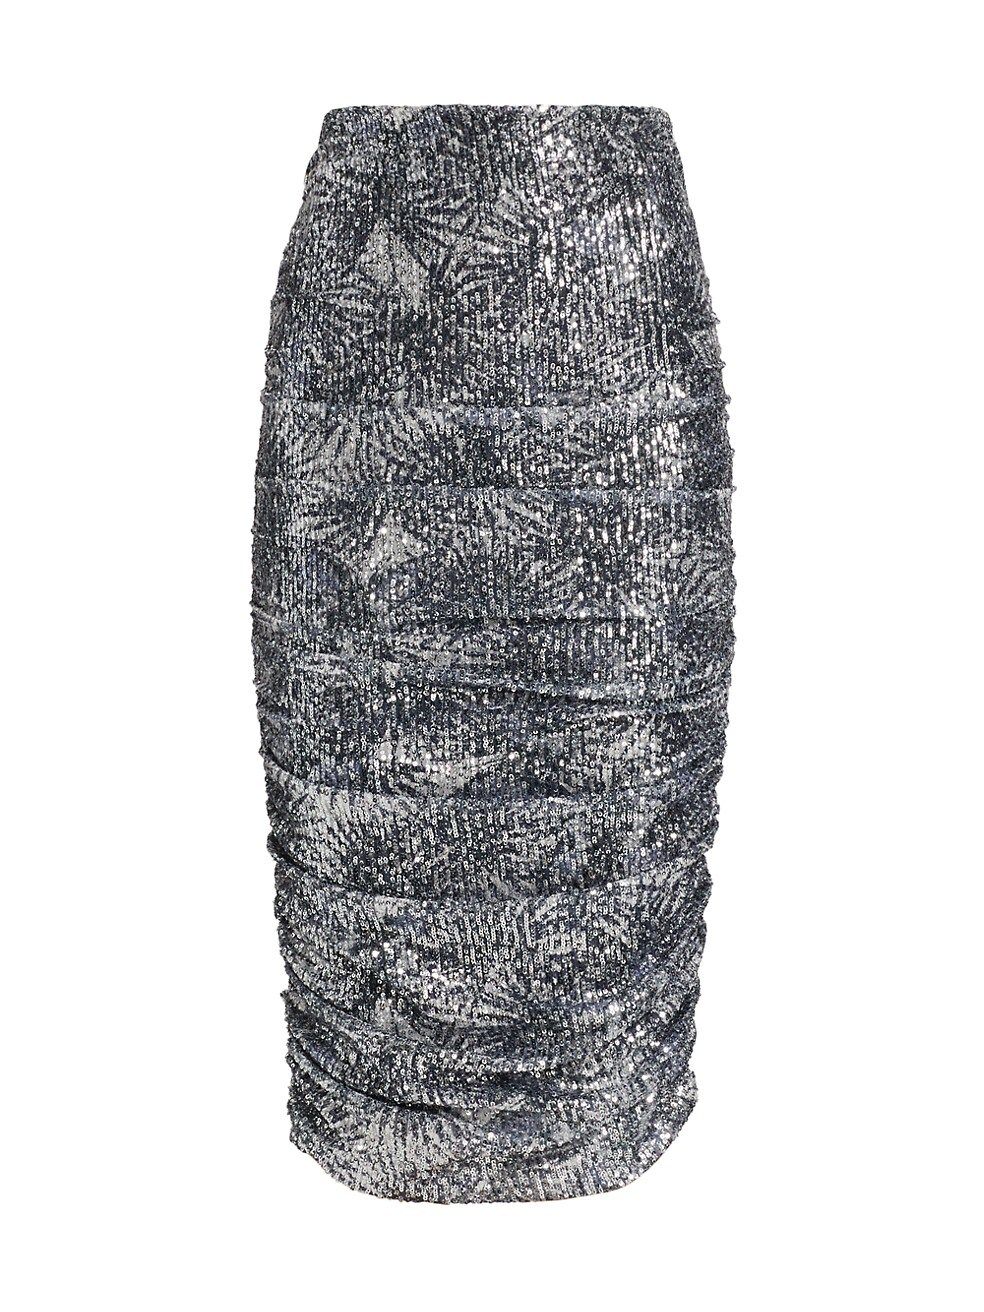 Le Superbe Rockstar Ruched Sequin Mesh Skirt | Saks Fifth Avenue